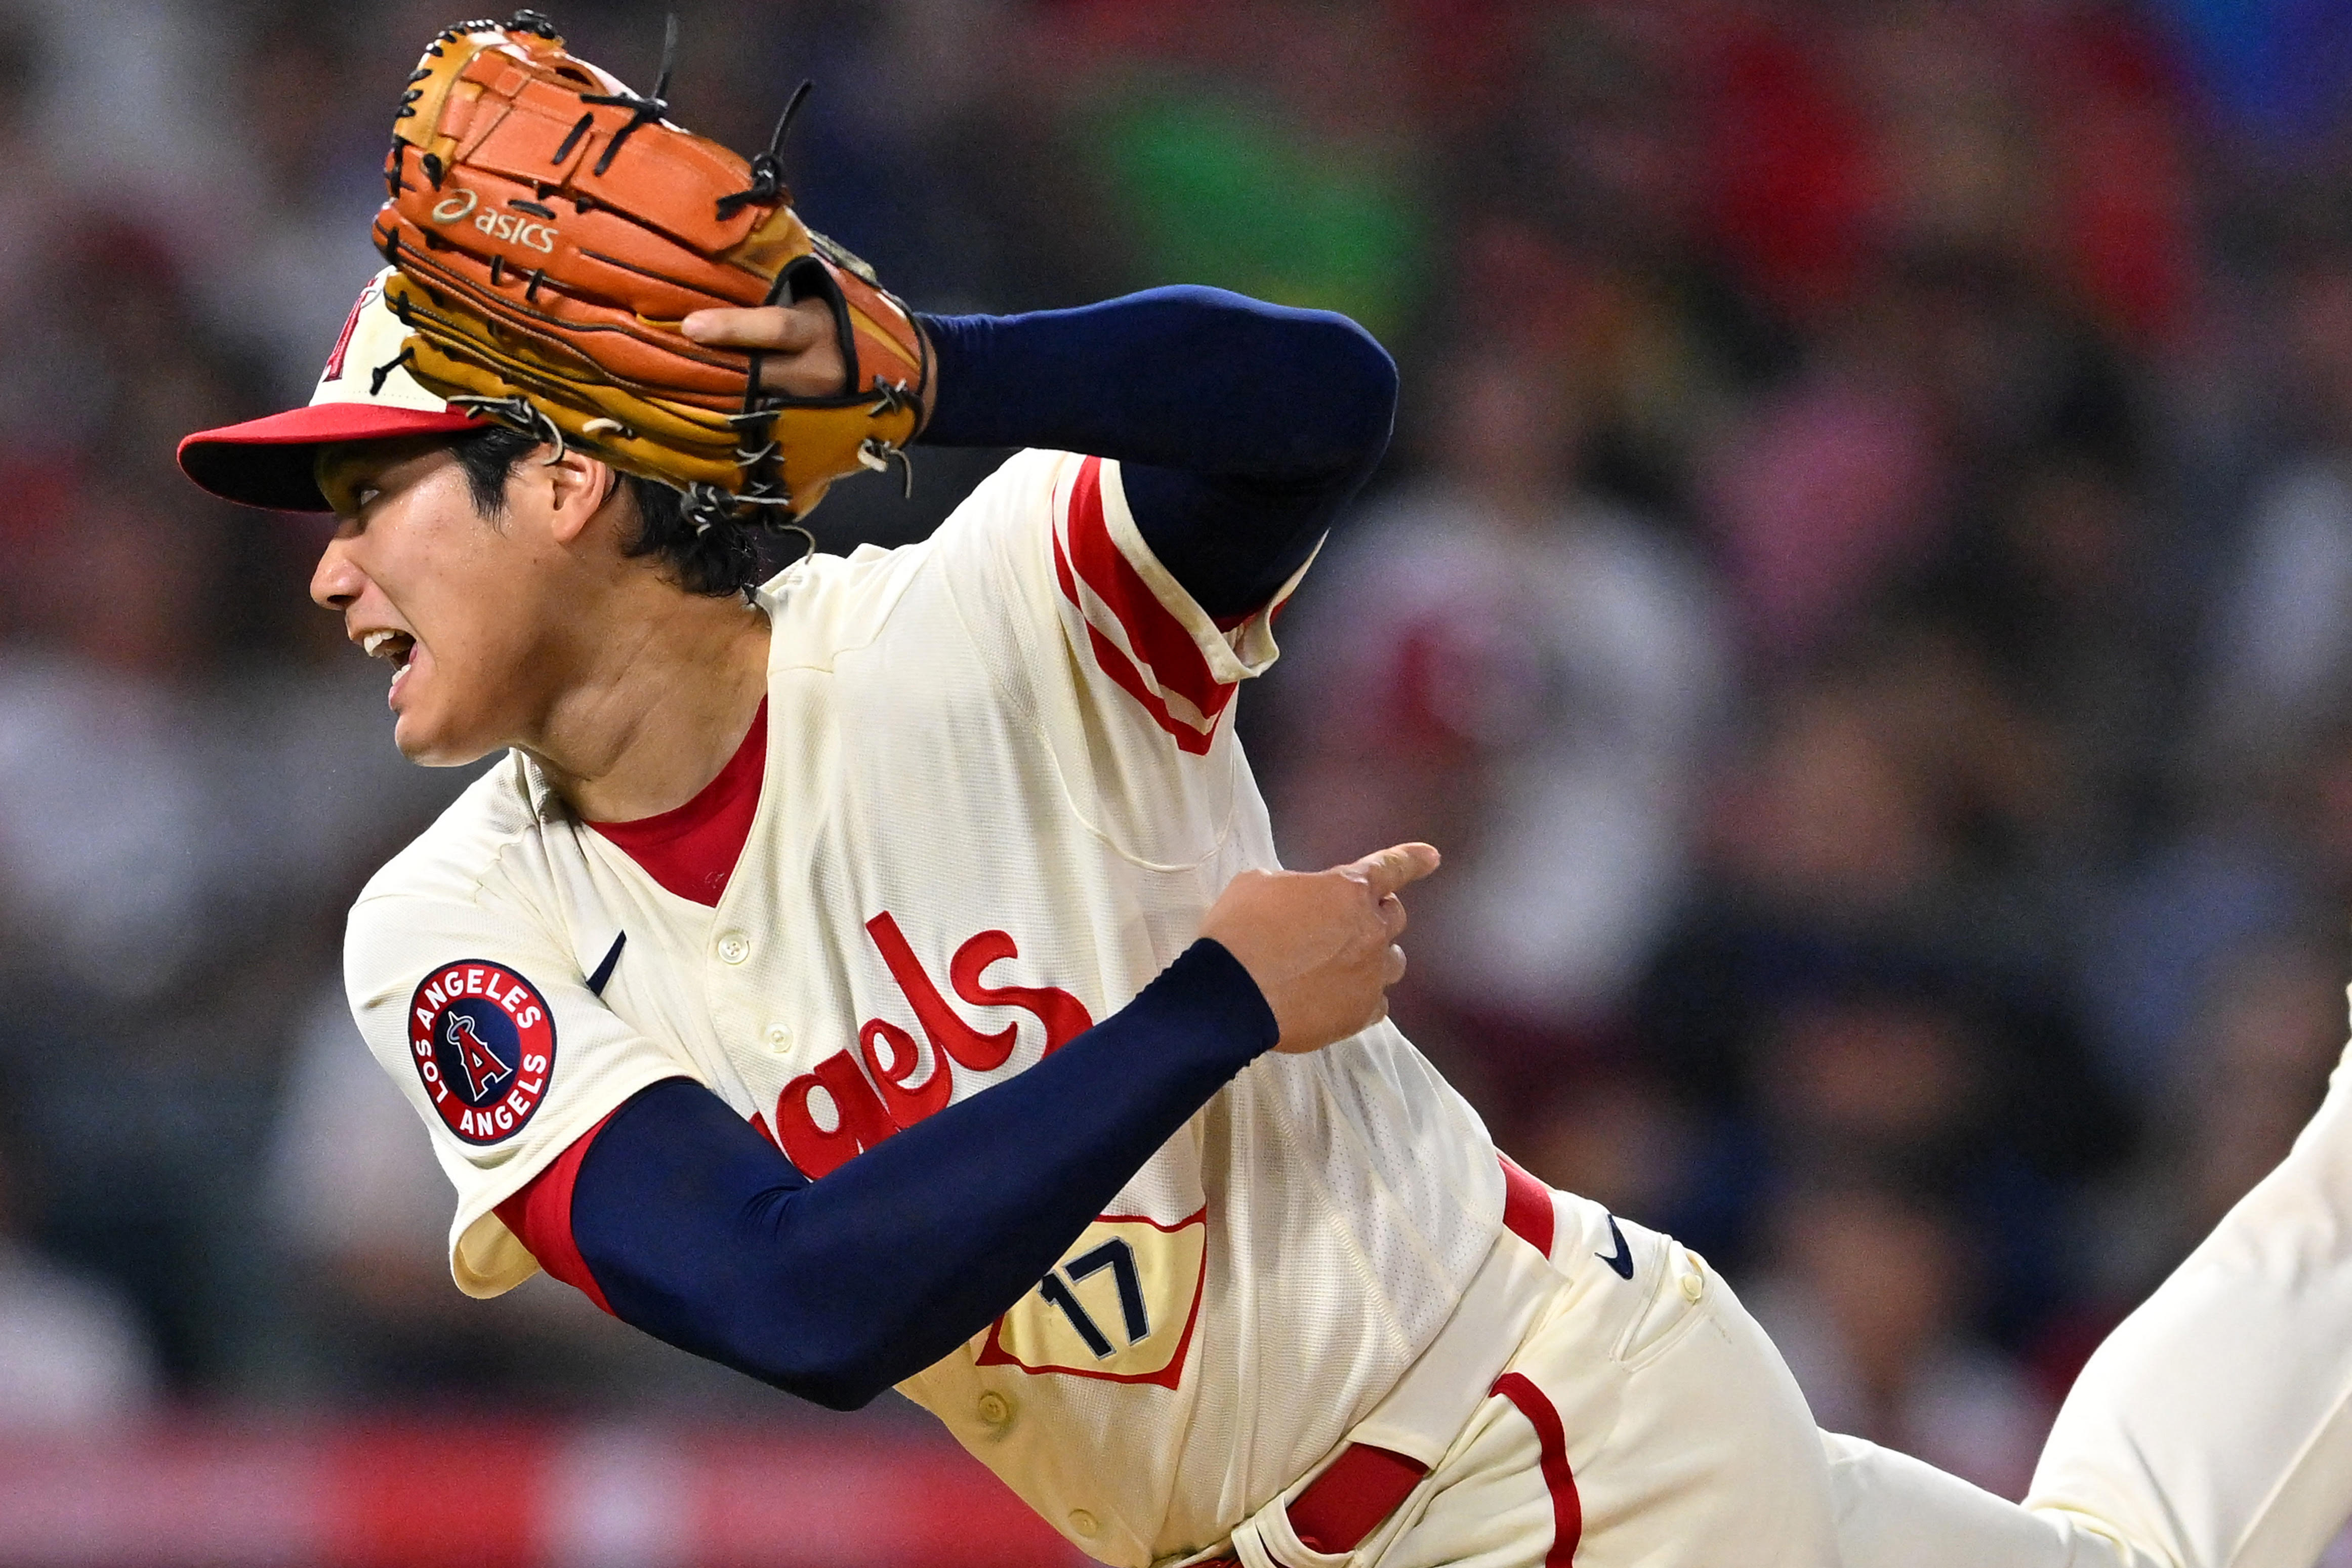 ASICS Shohei Ohtani Model Glove for Right Hand Los Angeles Angels Baseball  MLB